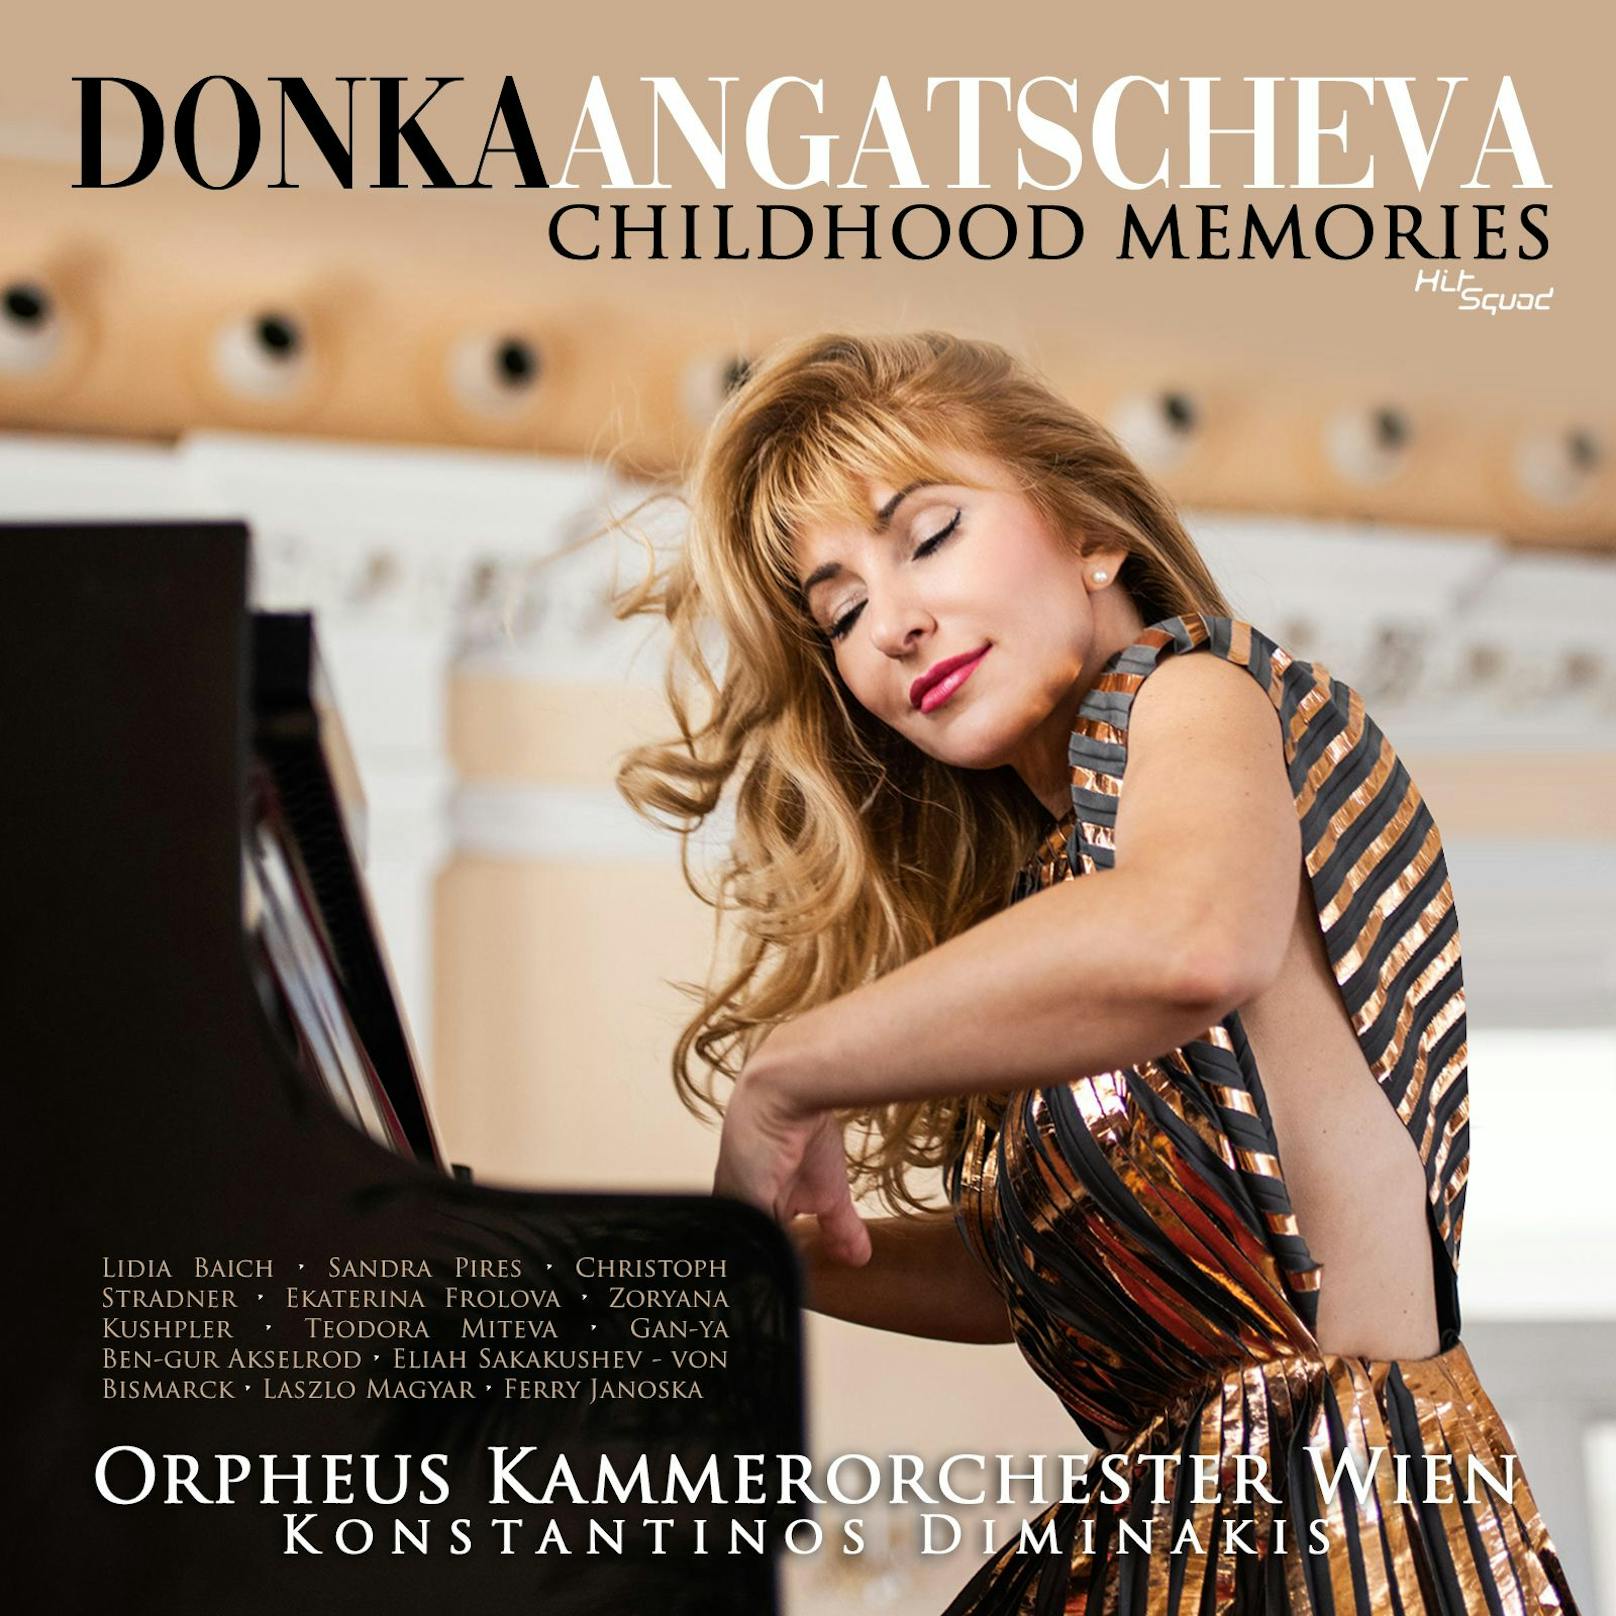 Albumcover "Childhood Memories" von Donka Angatscheva